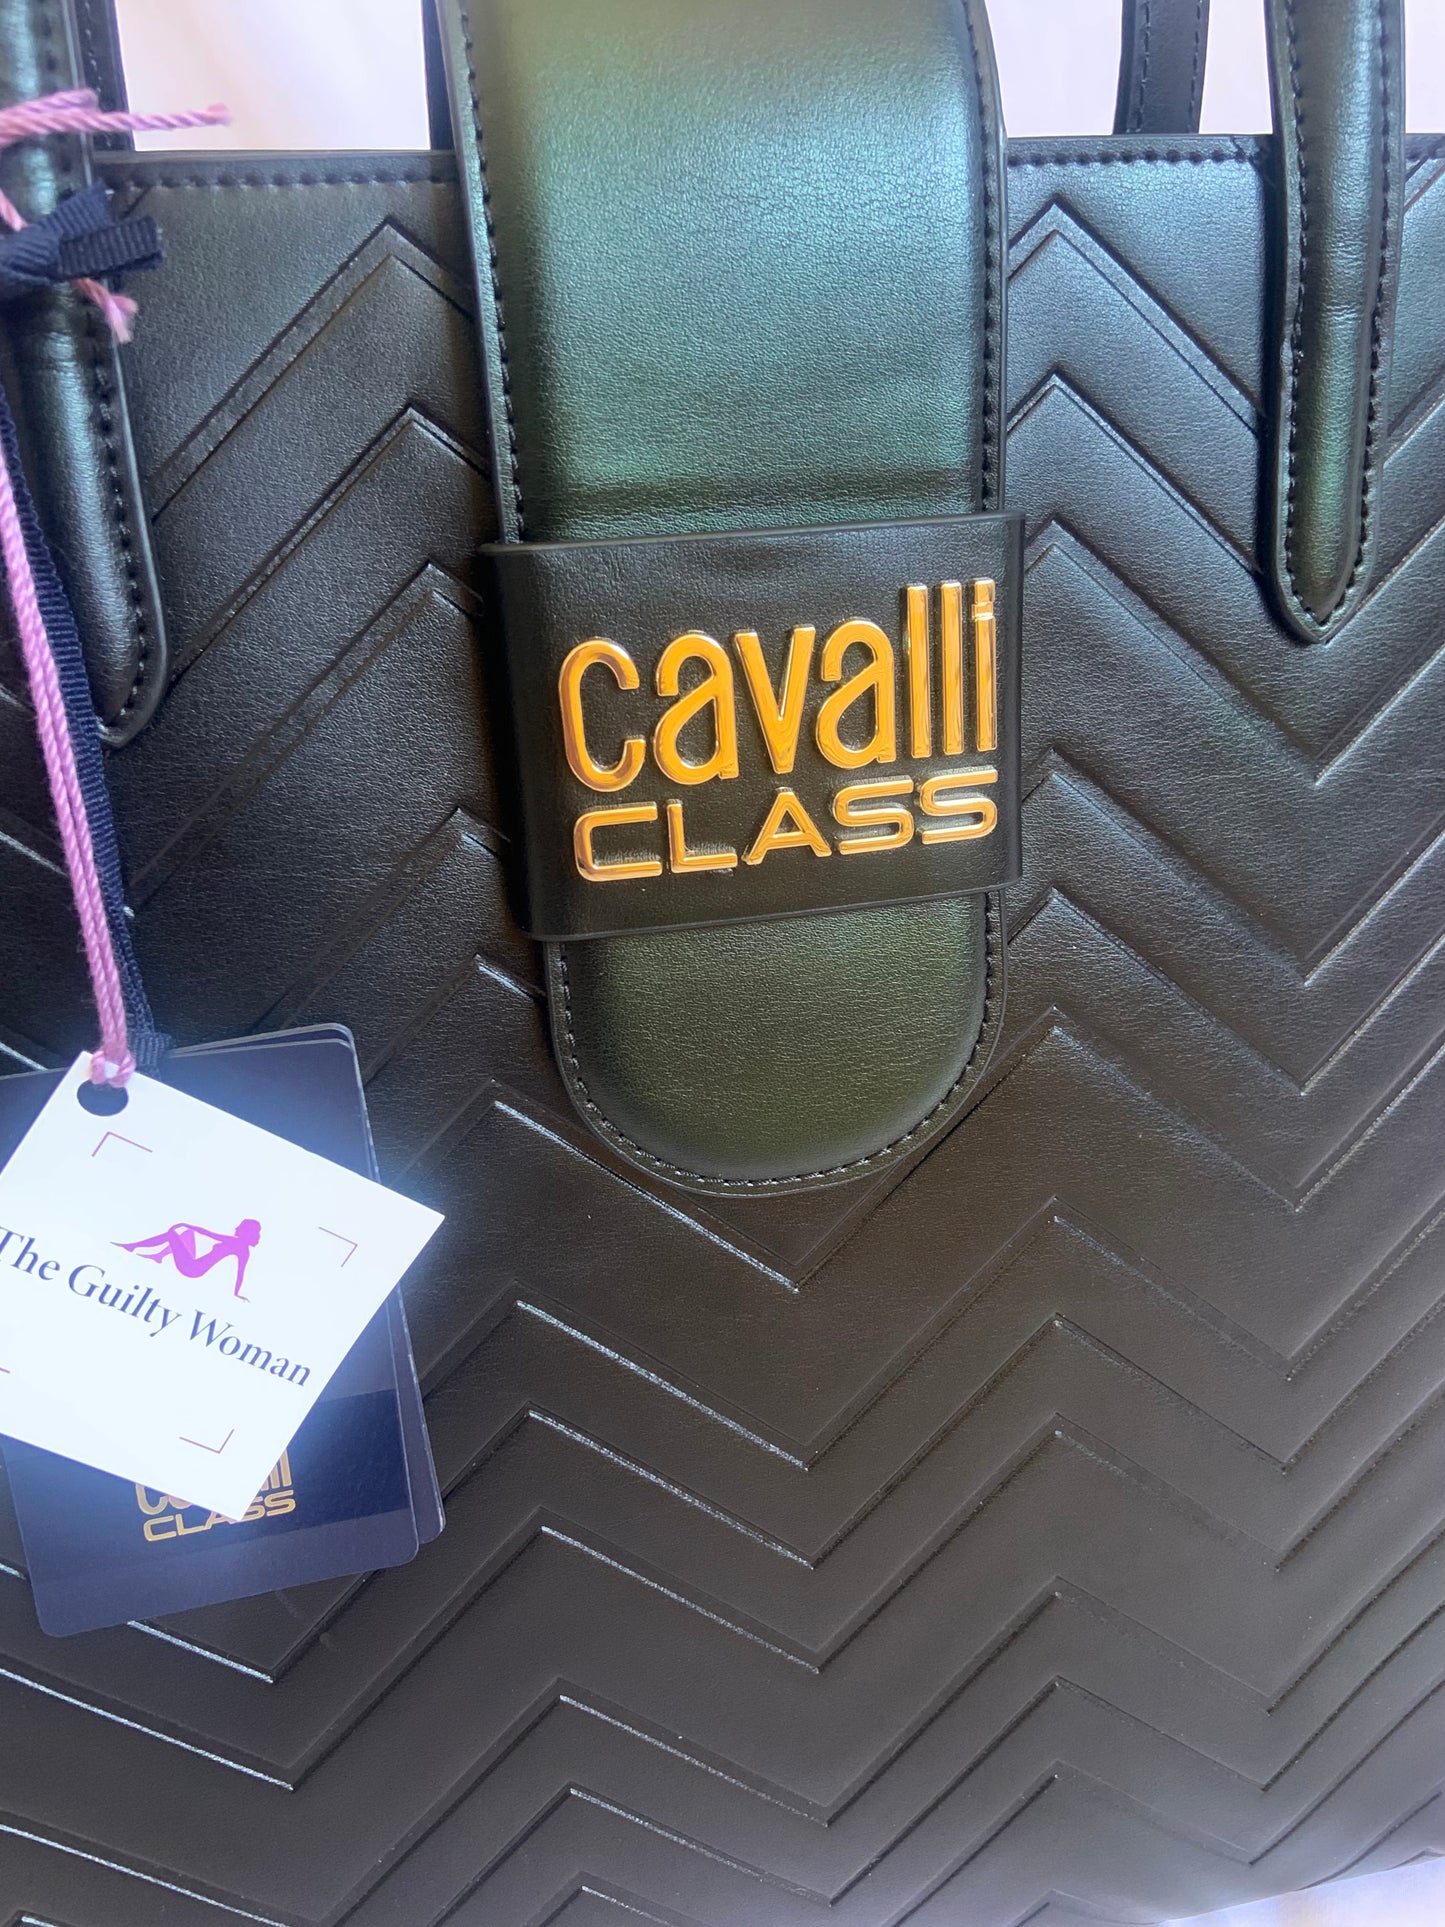 Cavalli Class "Alisa" Black Shopping Bag